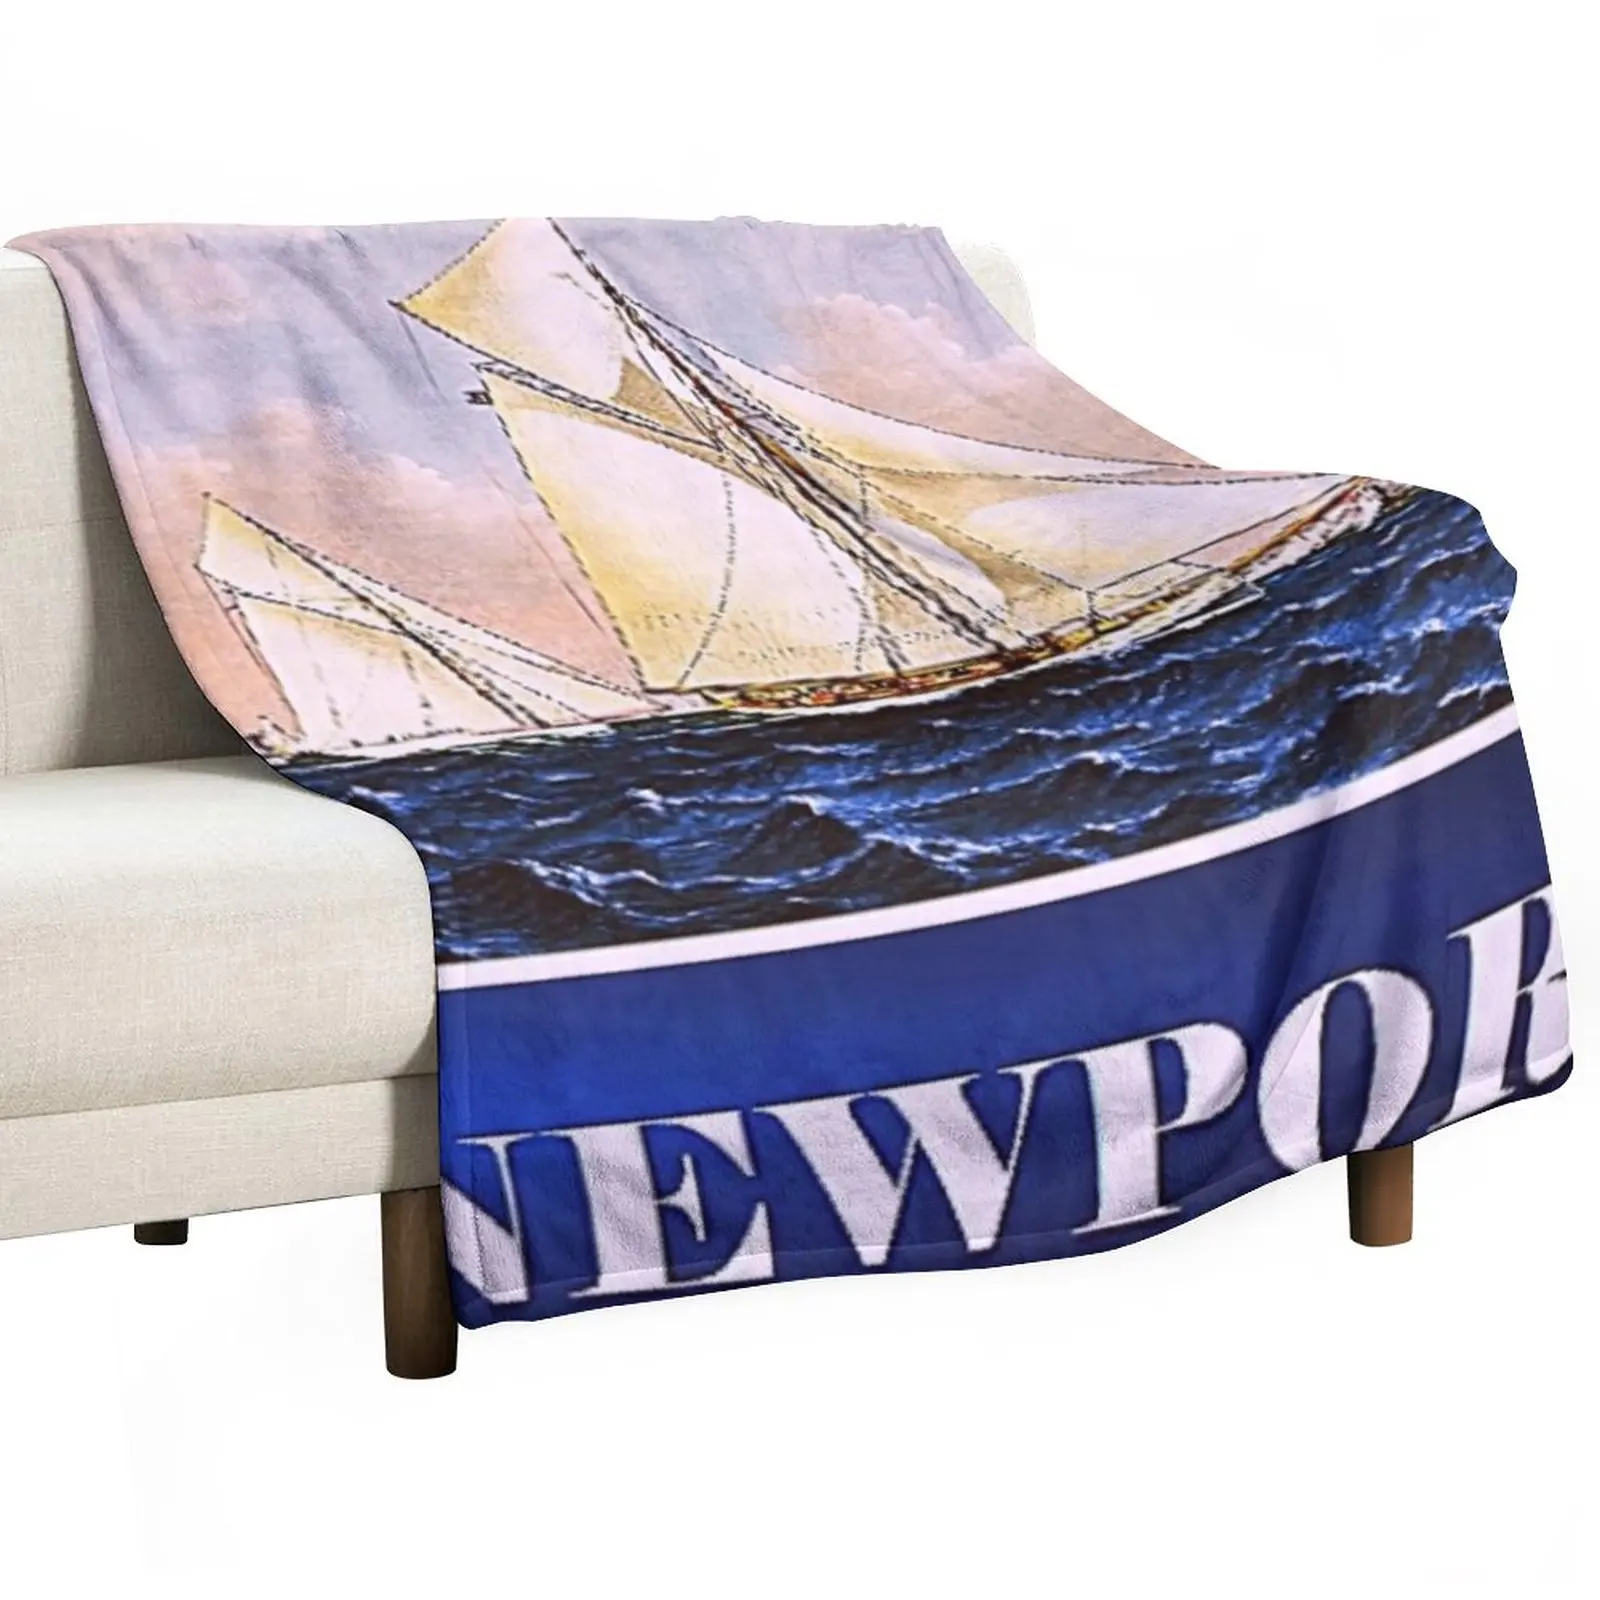 

New Vintage Discover Newport, Rhode Island Lithograph Wall Art #1 Throw Blanket anime Retro Blankets Beach Blanket